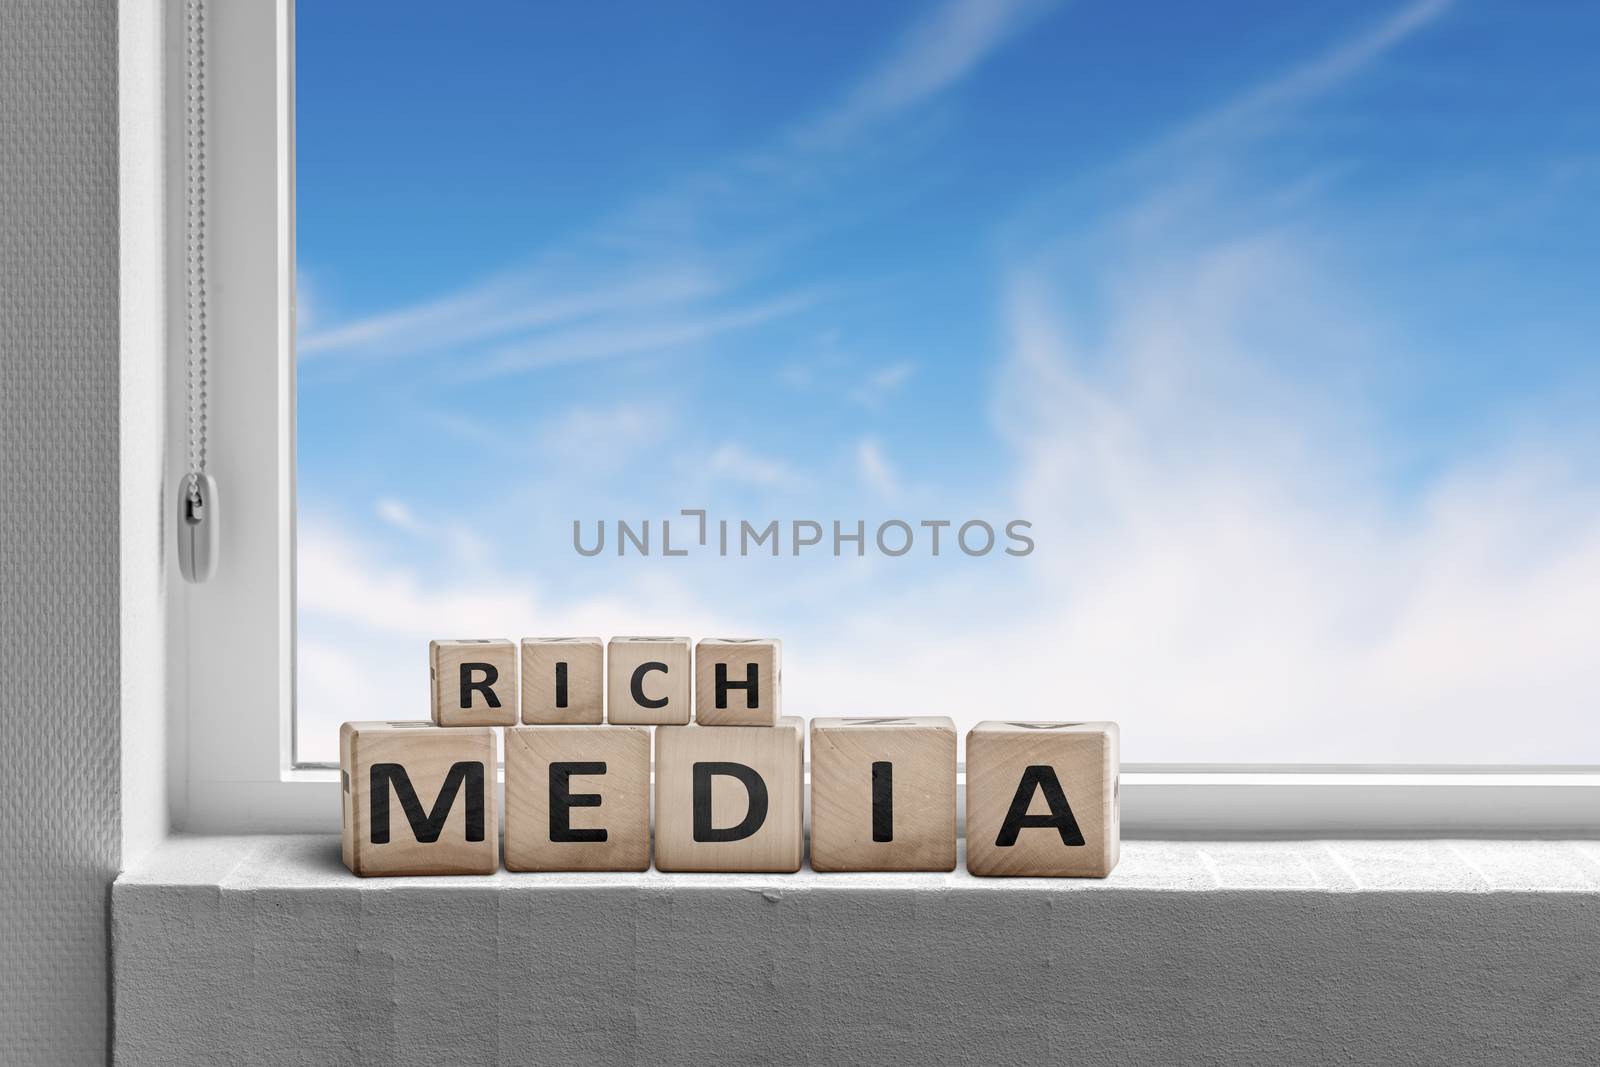 Rich media sign written on wooden blocks in a window with a blue sky outside